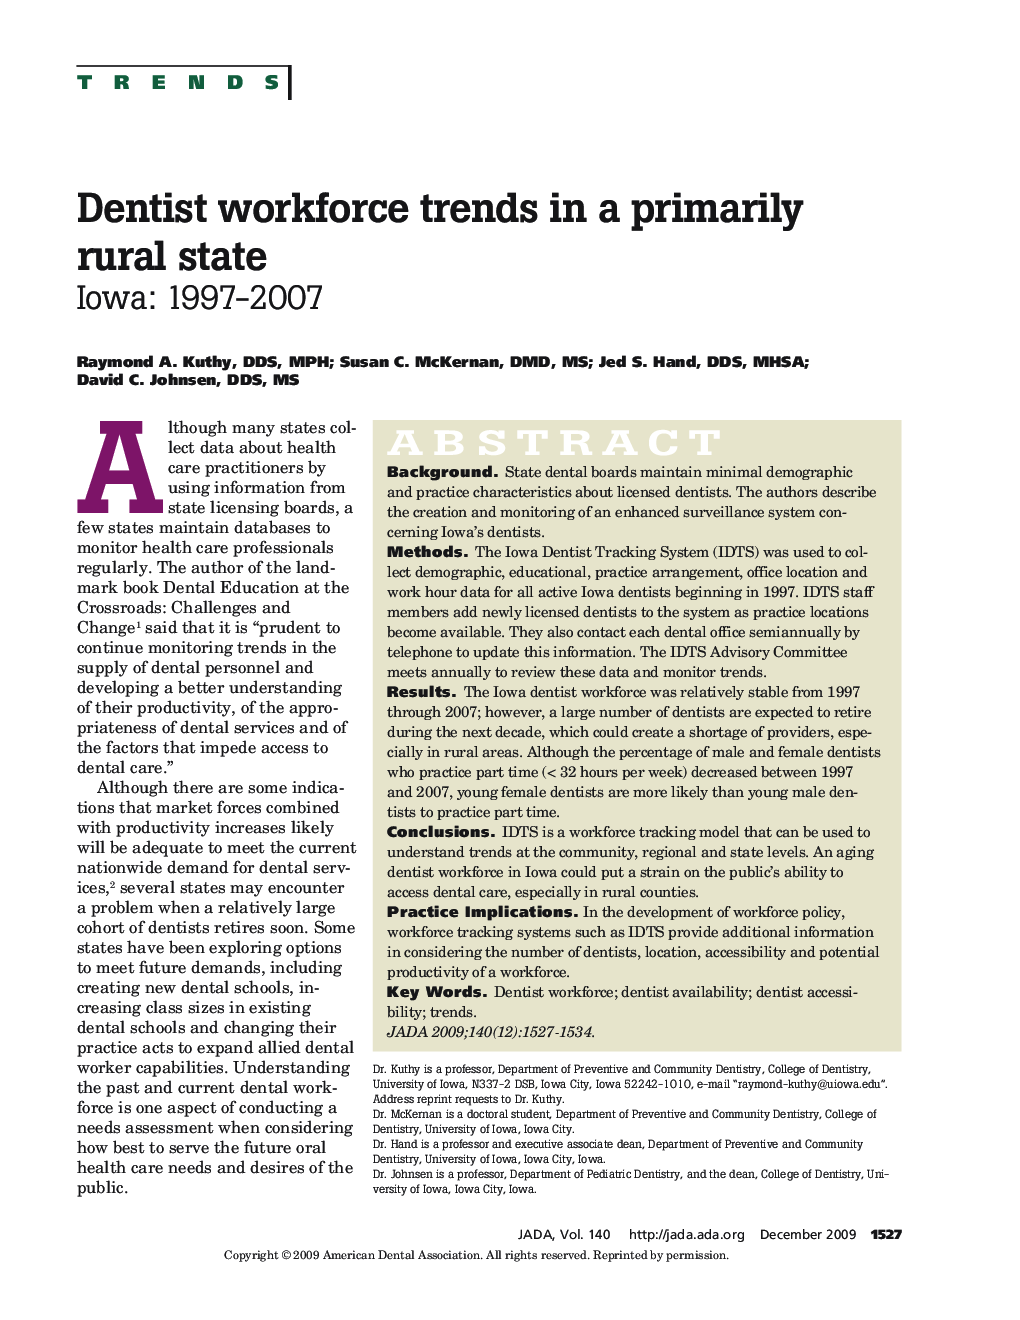 Dentist Workforce Trends in a Primarily Rural State : Iowa: 1997–2007